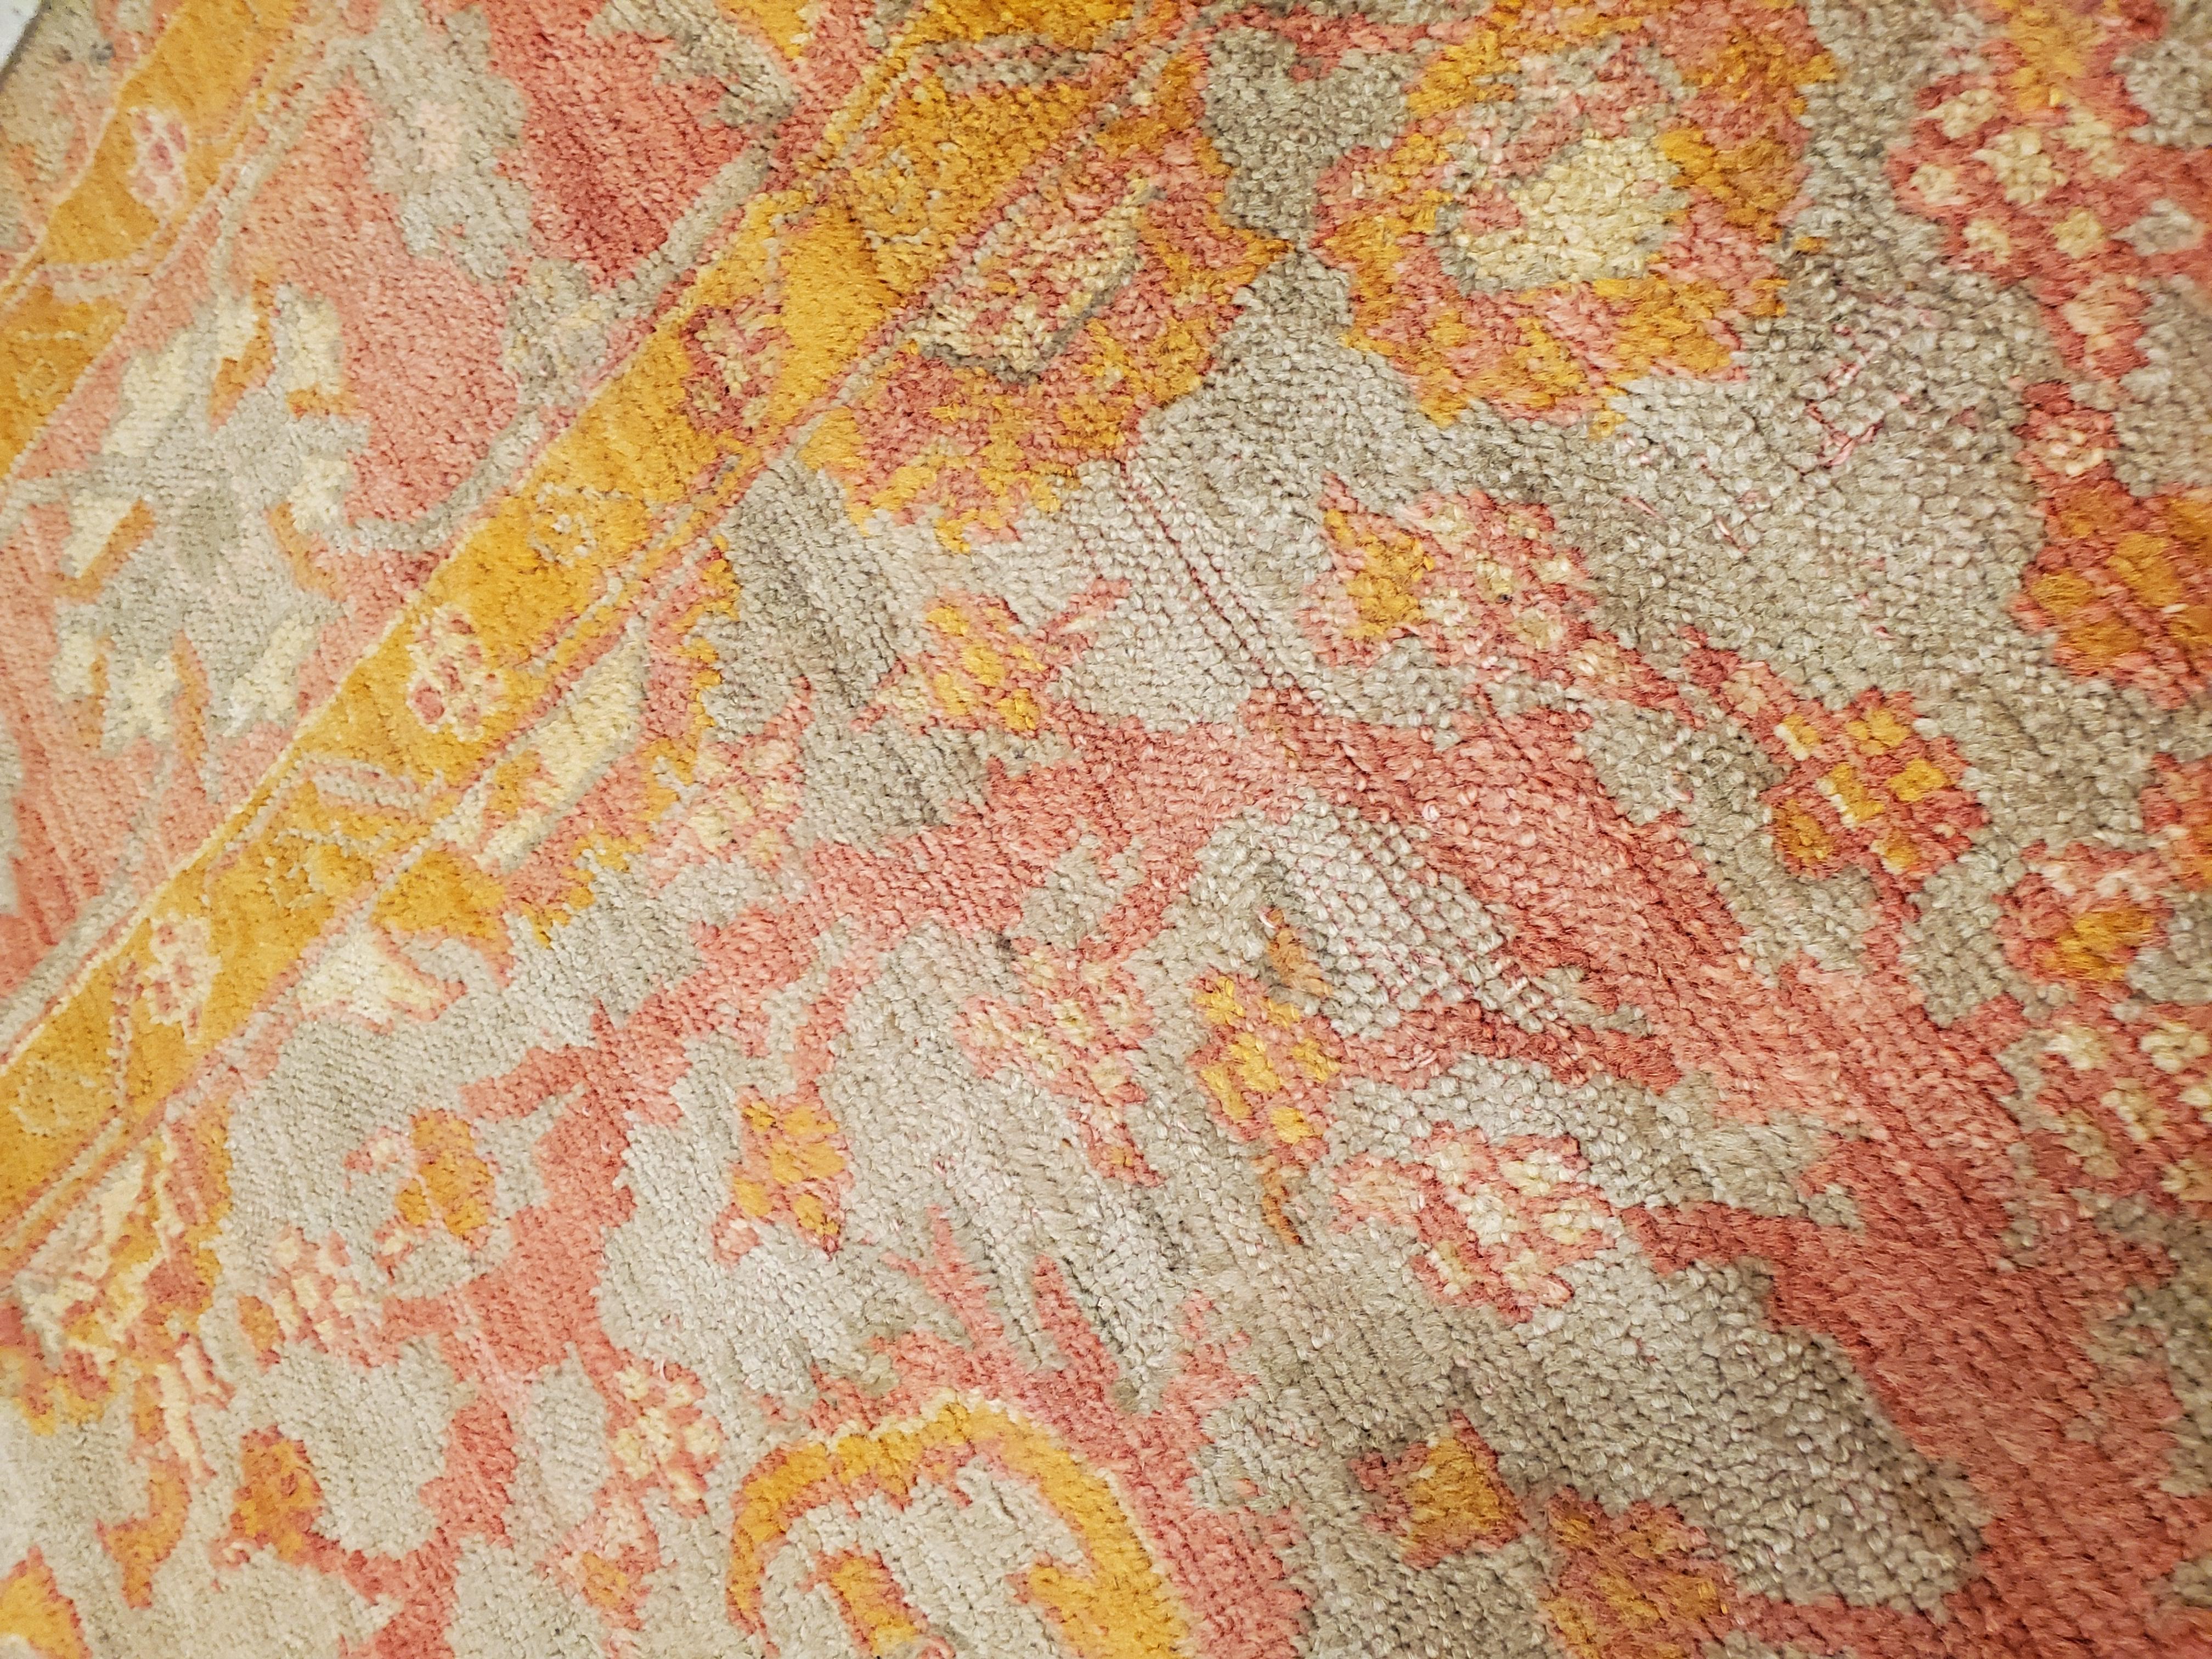 Antique Oushak Carpet, Handmade Turkish Oriental Rug, Saffron, Coral, Light Blue For Sale 5